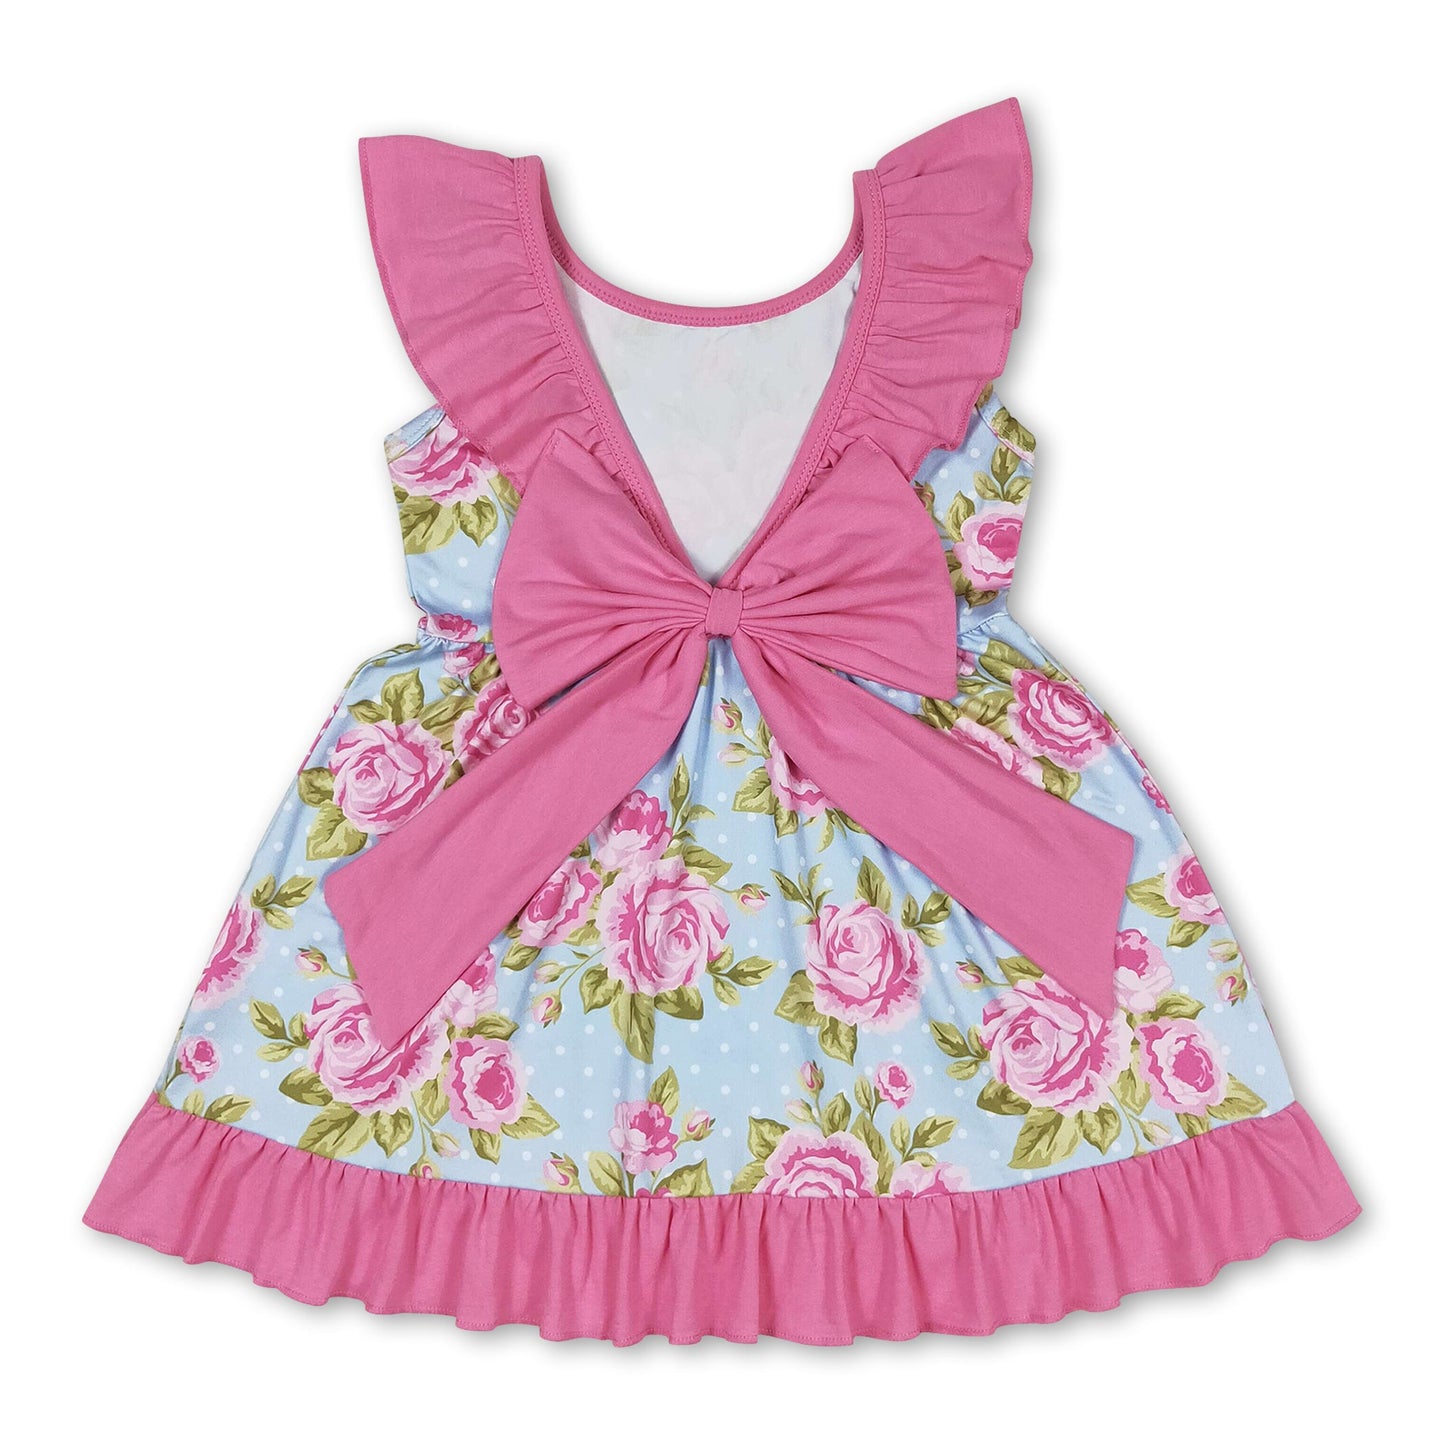 Backless bow pink ruffle flower kids girls dresses